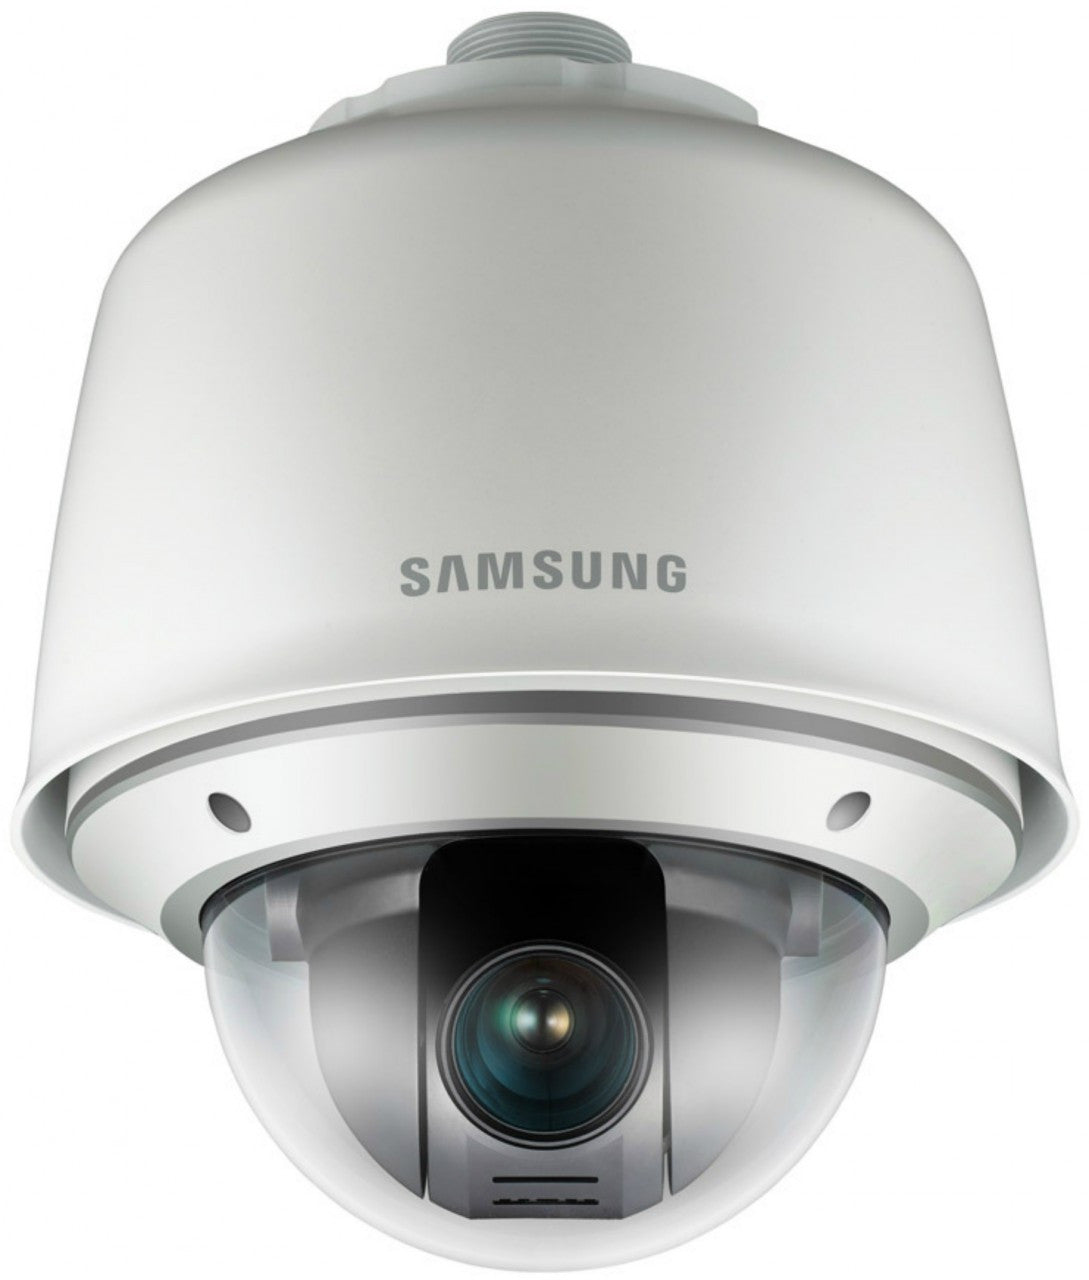 Samsung SNP-3430H 4CIF 43x Network PTZ Dome Camera